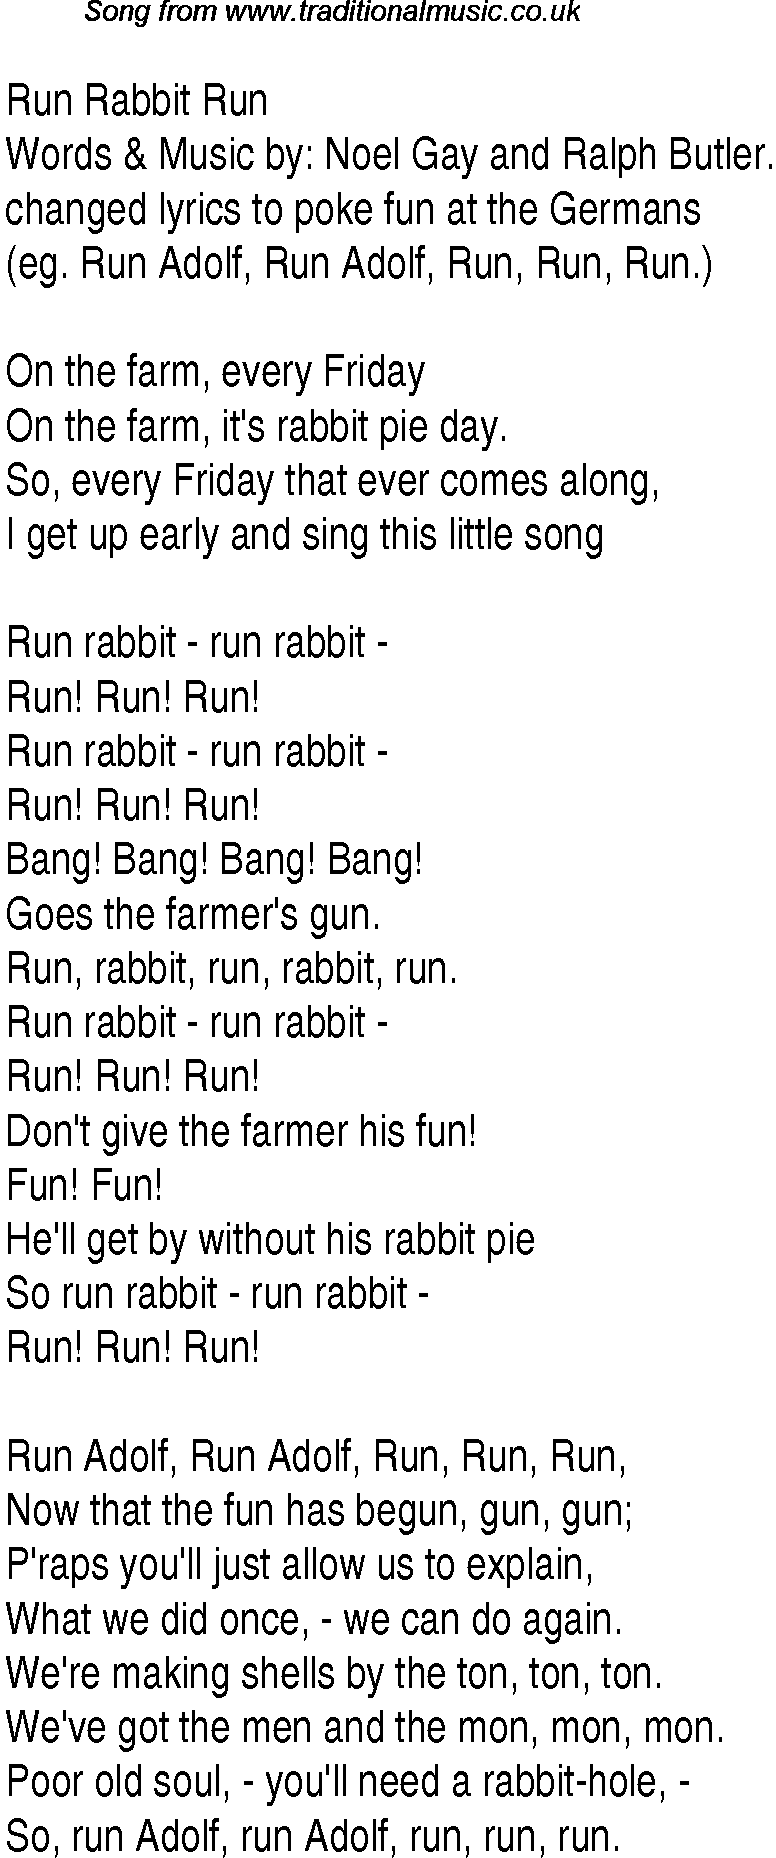 1940s top songs - lyrics for Run Rabbit Run